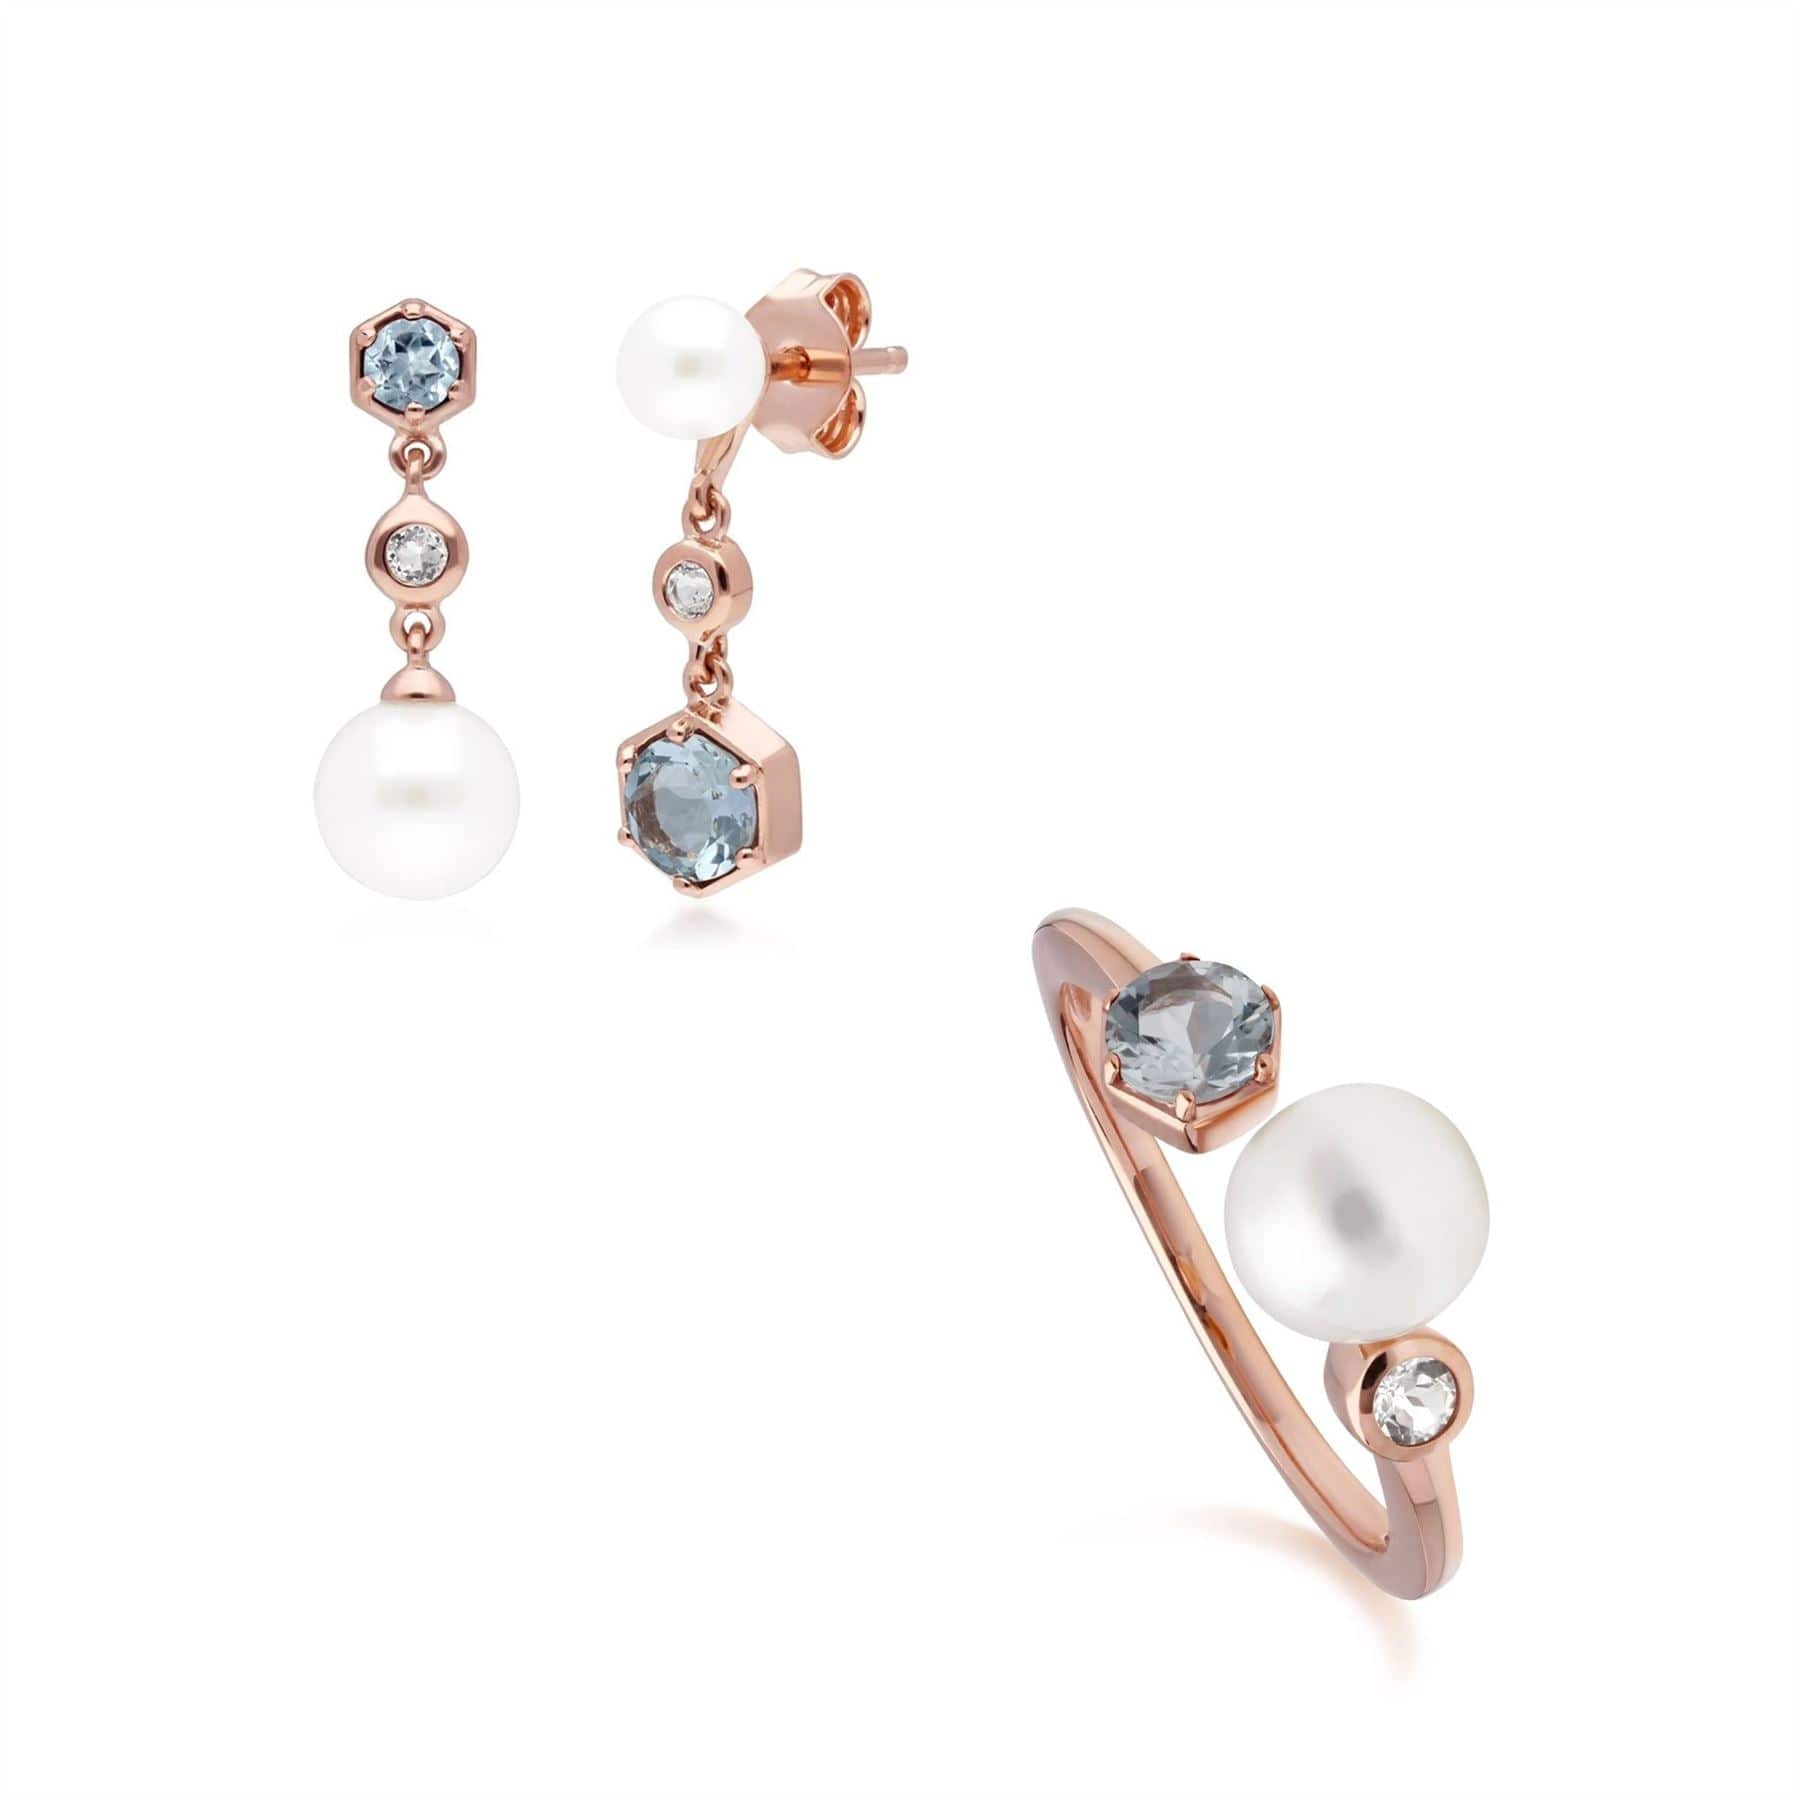 Modern Pearl, Aquamarine & Topaz Earring & Ring Set in Rose Gold Plated Silver - Gemondo